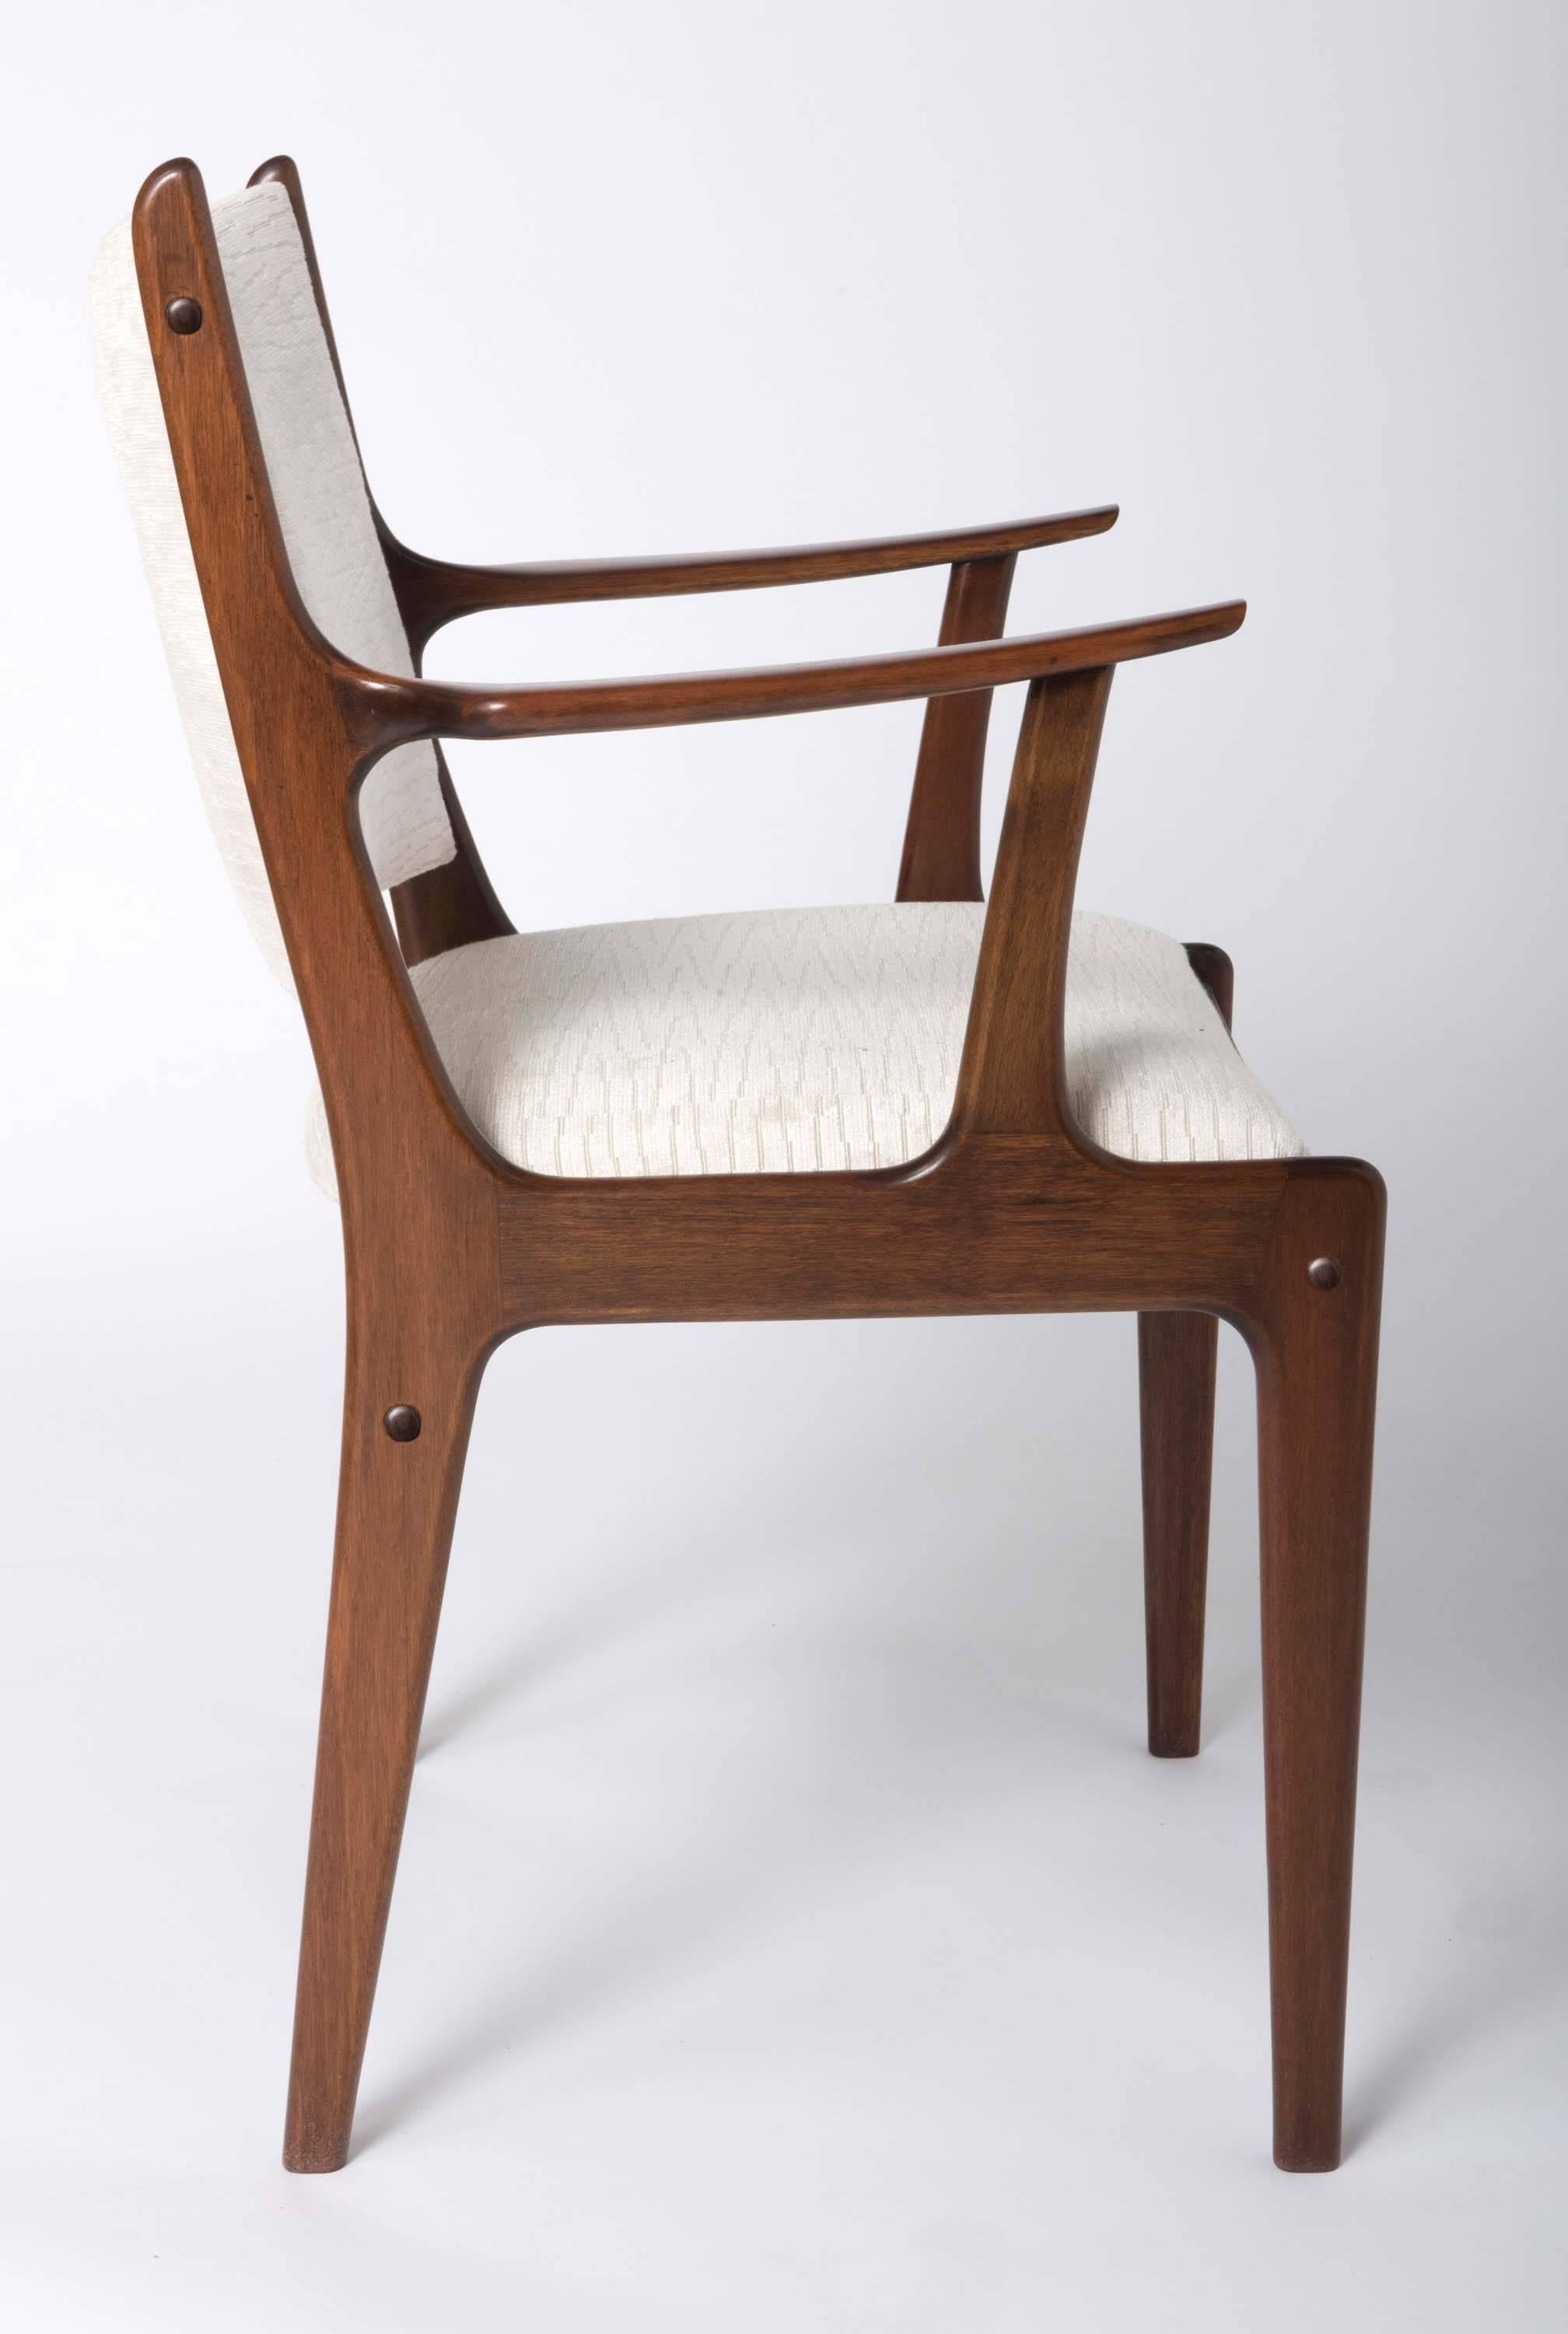 A set of twelve Danish rosewood chairs.
Designed by Johannes Andersen for Uldum Møbelfabrik.
Denmark, circa 1960.
Measures: 79 cm high x 46 cm wide x 43 cm deep.
Seat height: 43 cm.
 